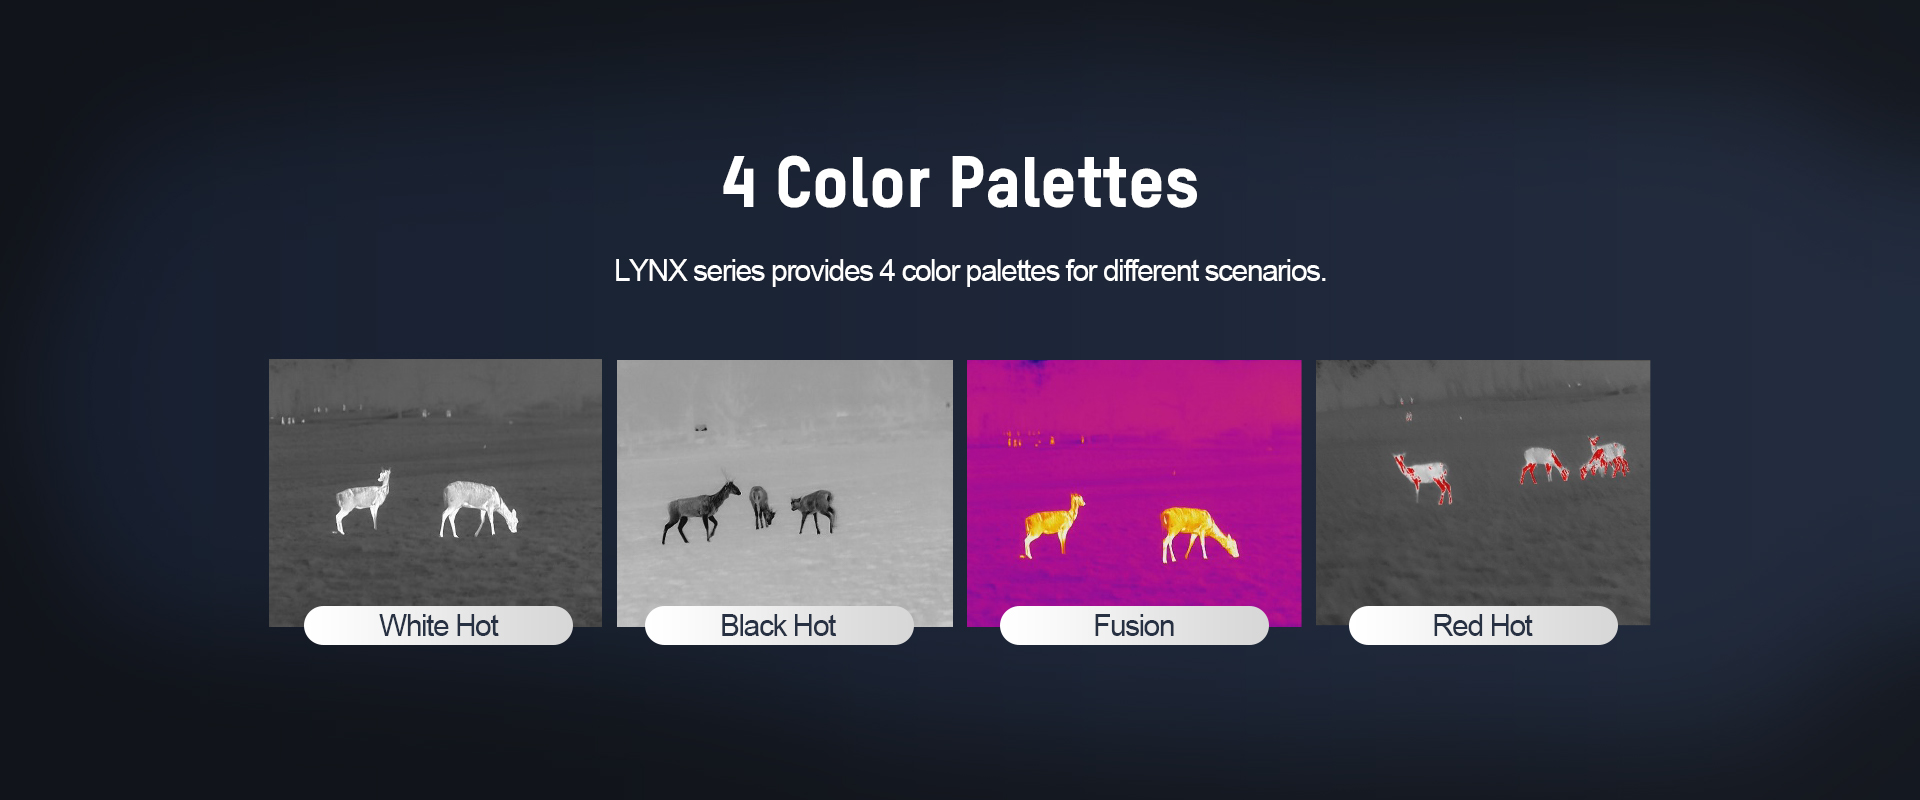 06-4 Color Palettes_LYNX.jpg